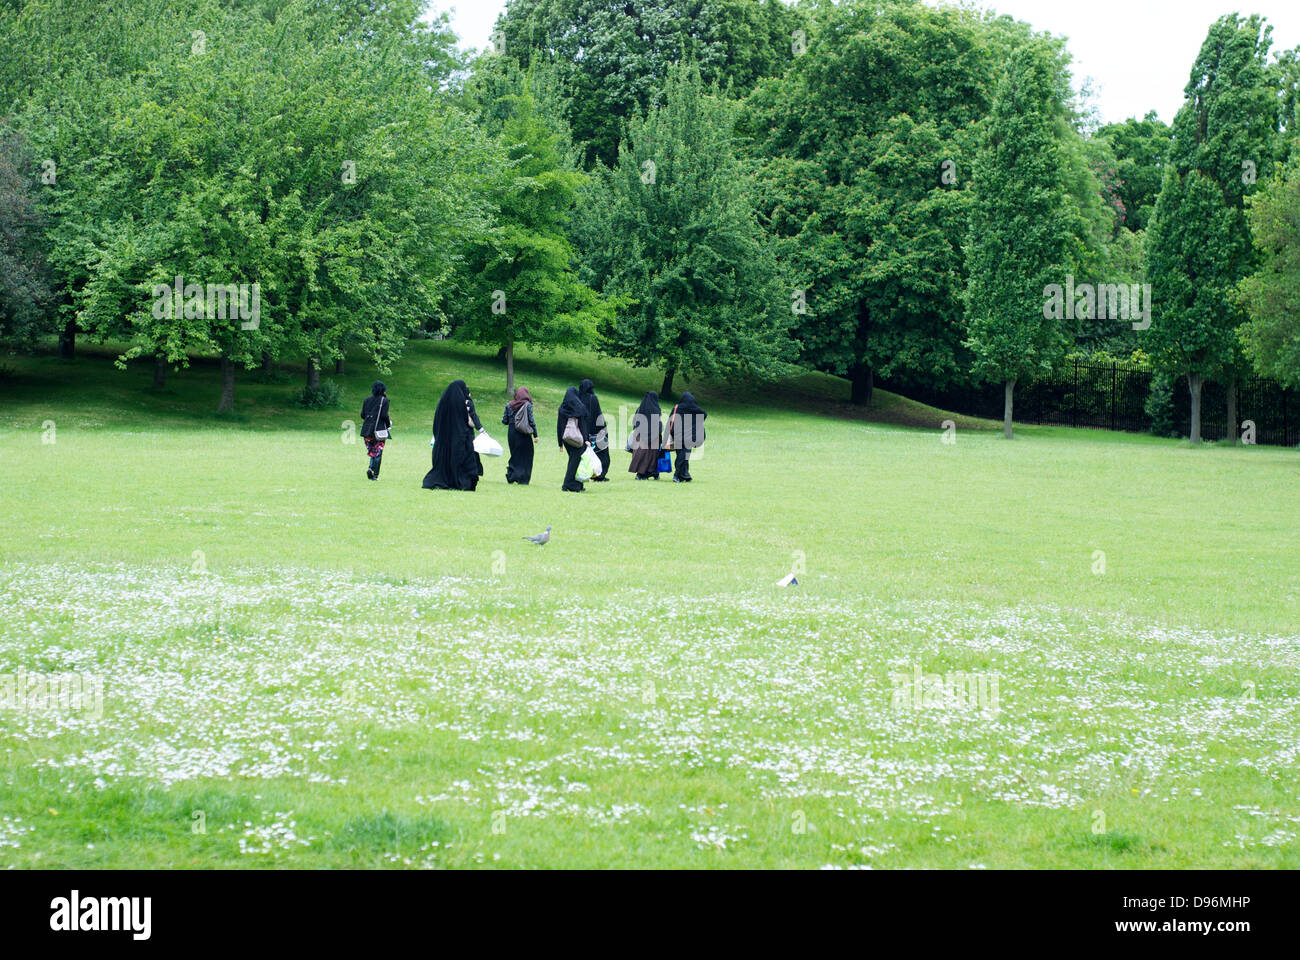 A group of muslim women walking across a park wearing burkhas Stock Photo